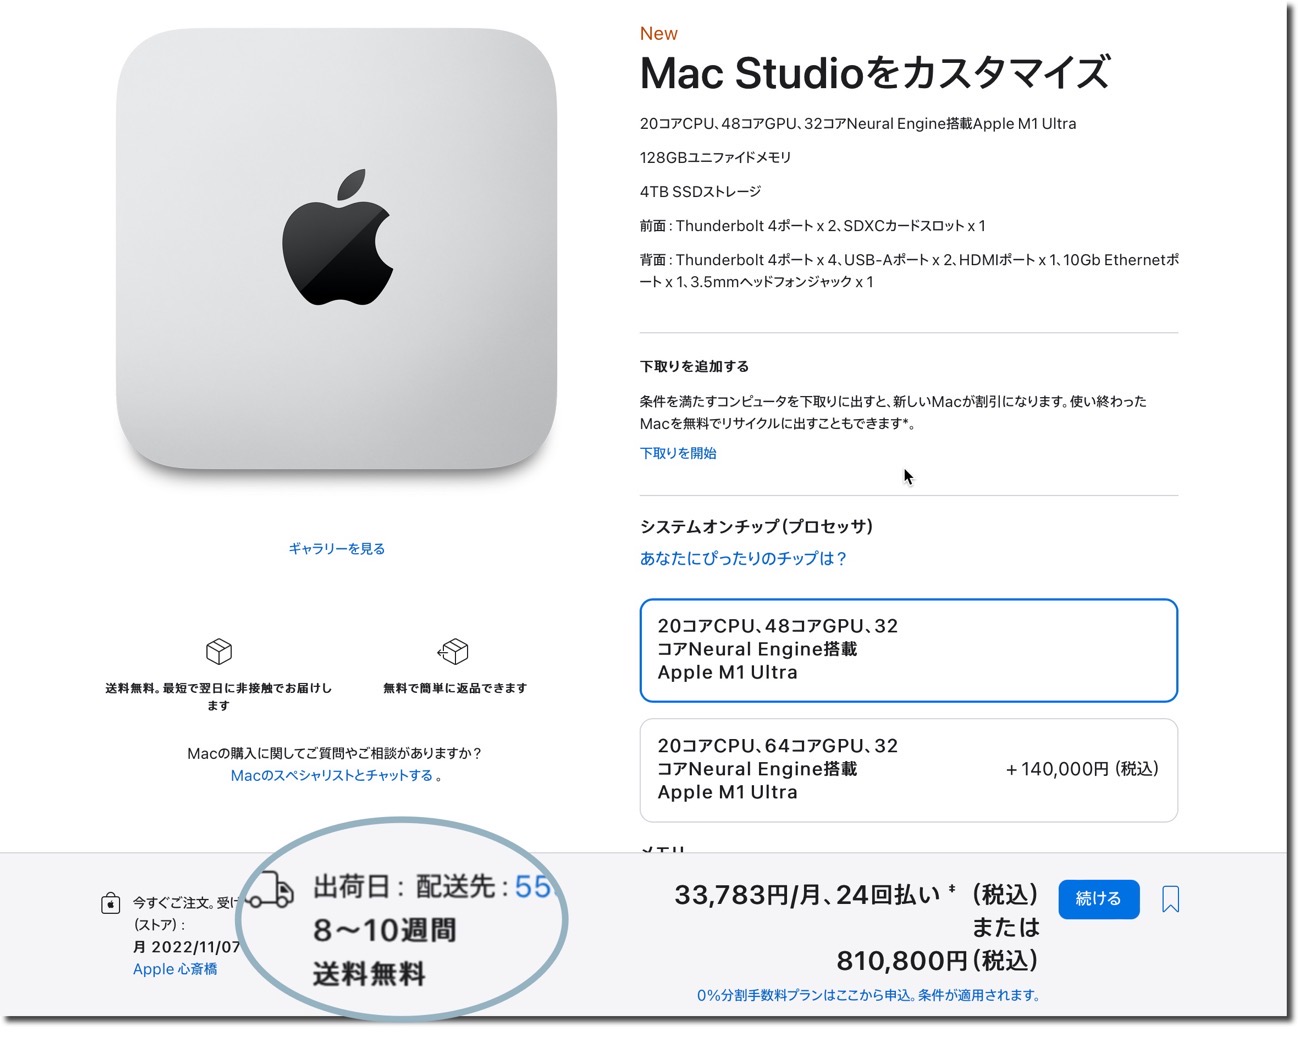 Mac Studio 0821 001